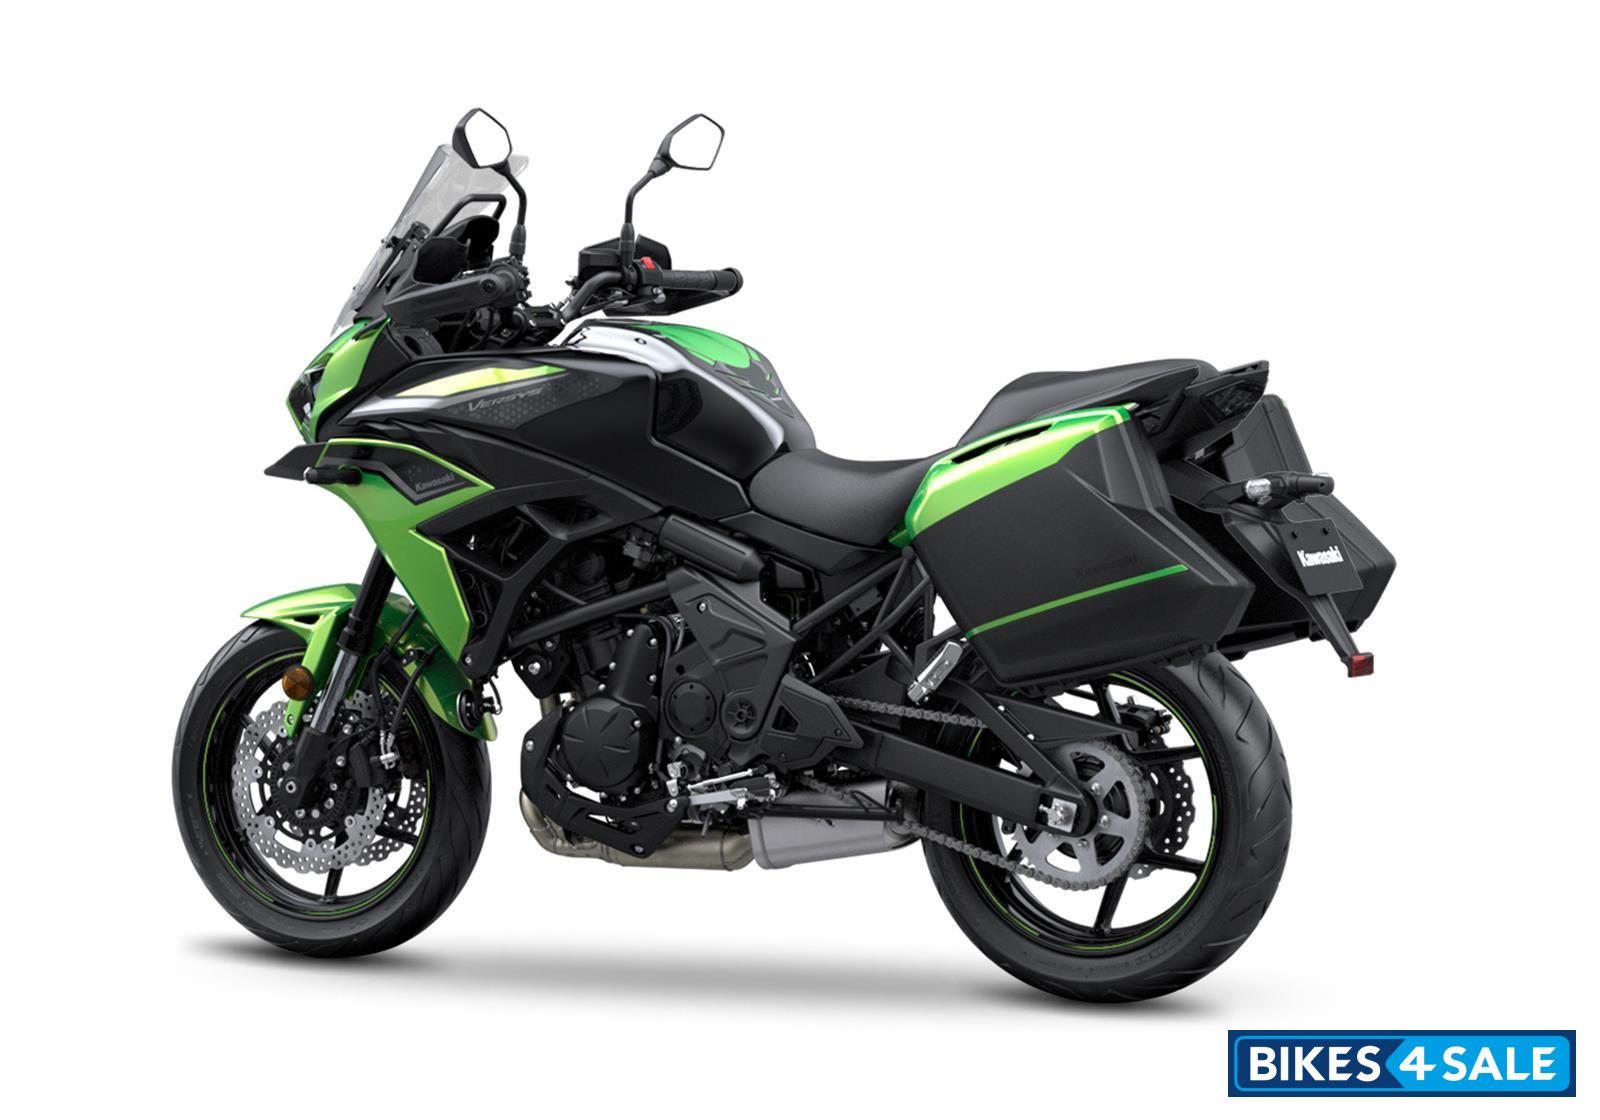 Kawasaki Versys 650 Tourer 2022 - Candy Lime Green / Metallic Flat Spark Black / Metallic Spark Black